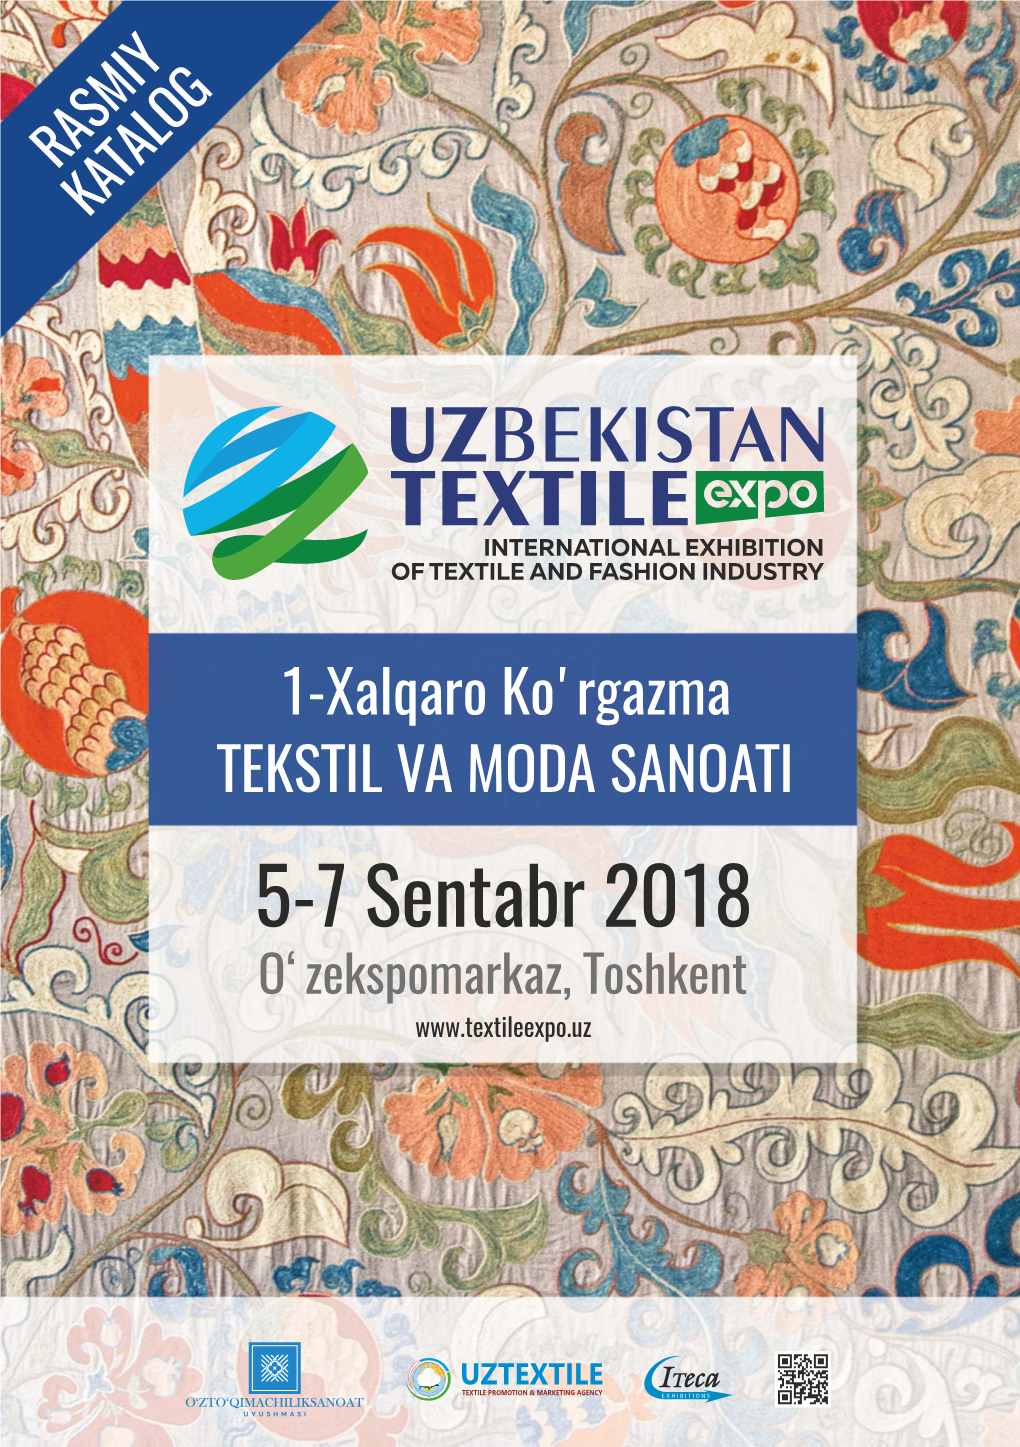 Catalogue Textile-2018.Pdf 8432 Кб